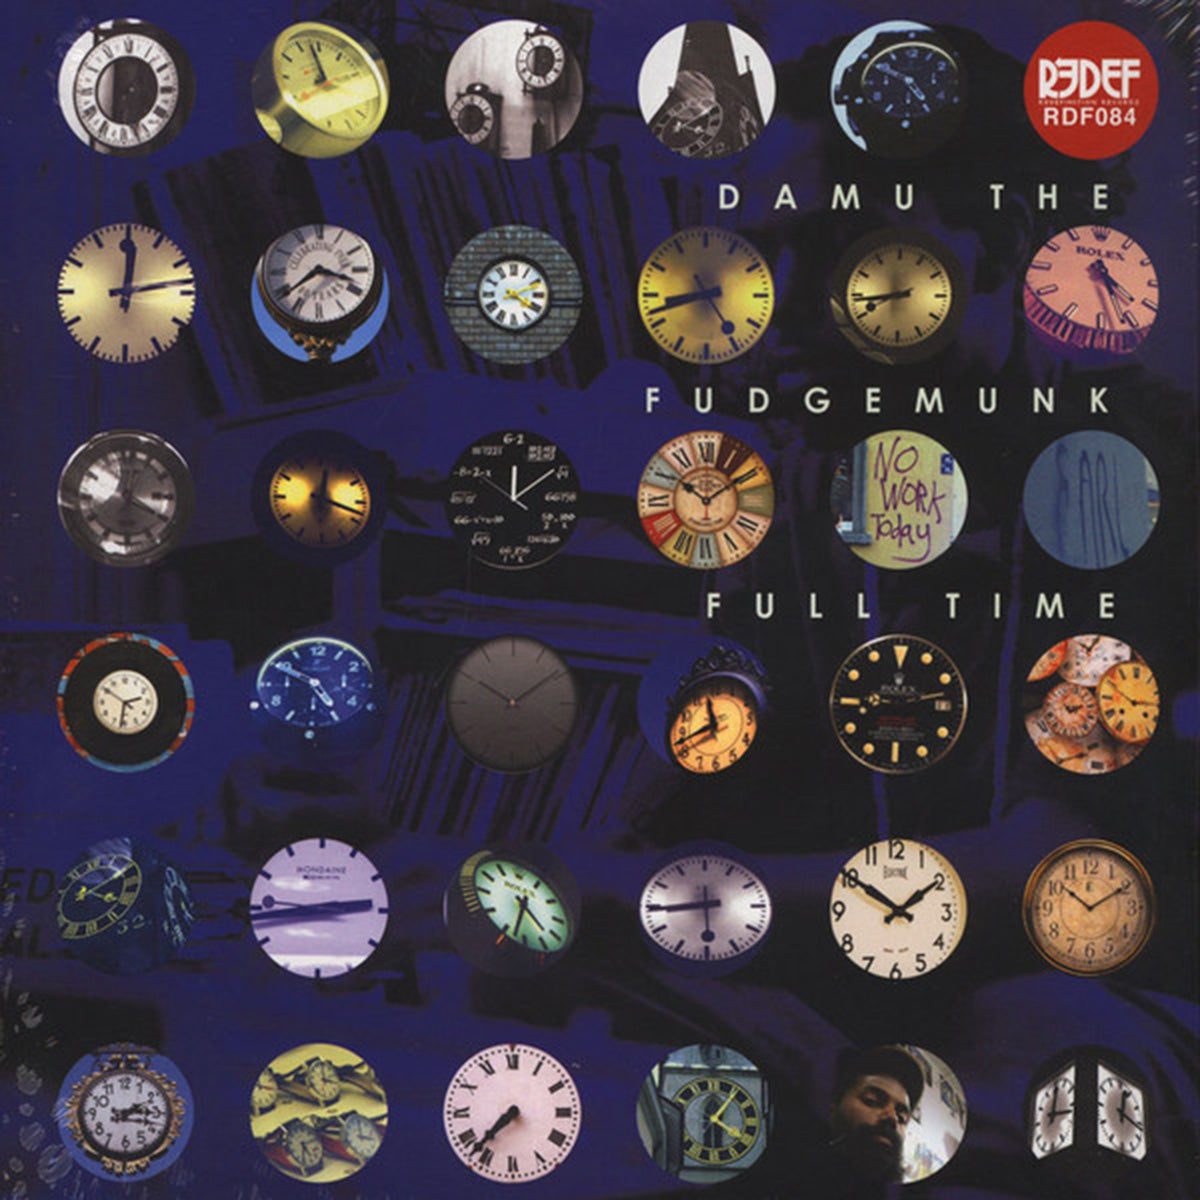 Damu The Fudgemunk – Full Time - Rare, Includes 7" Single